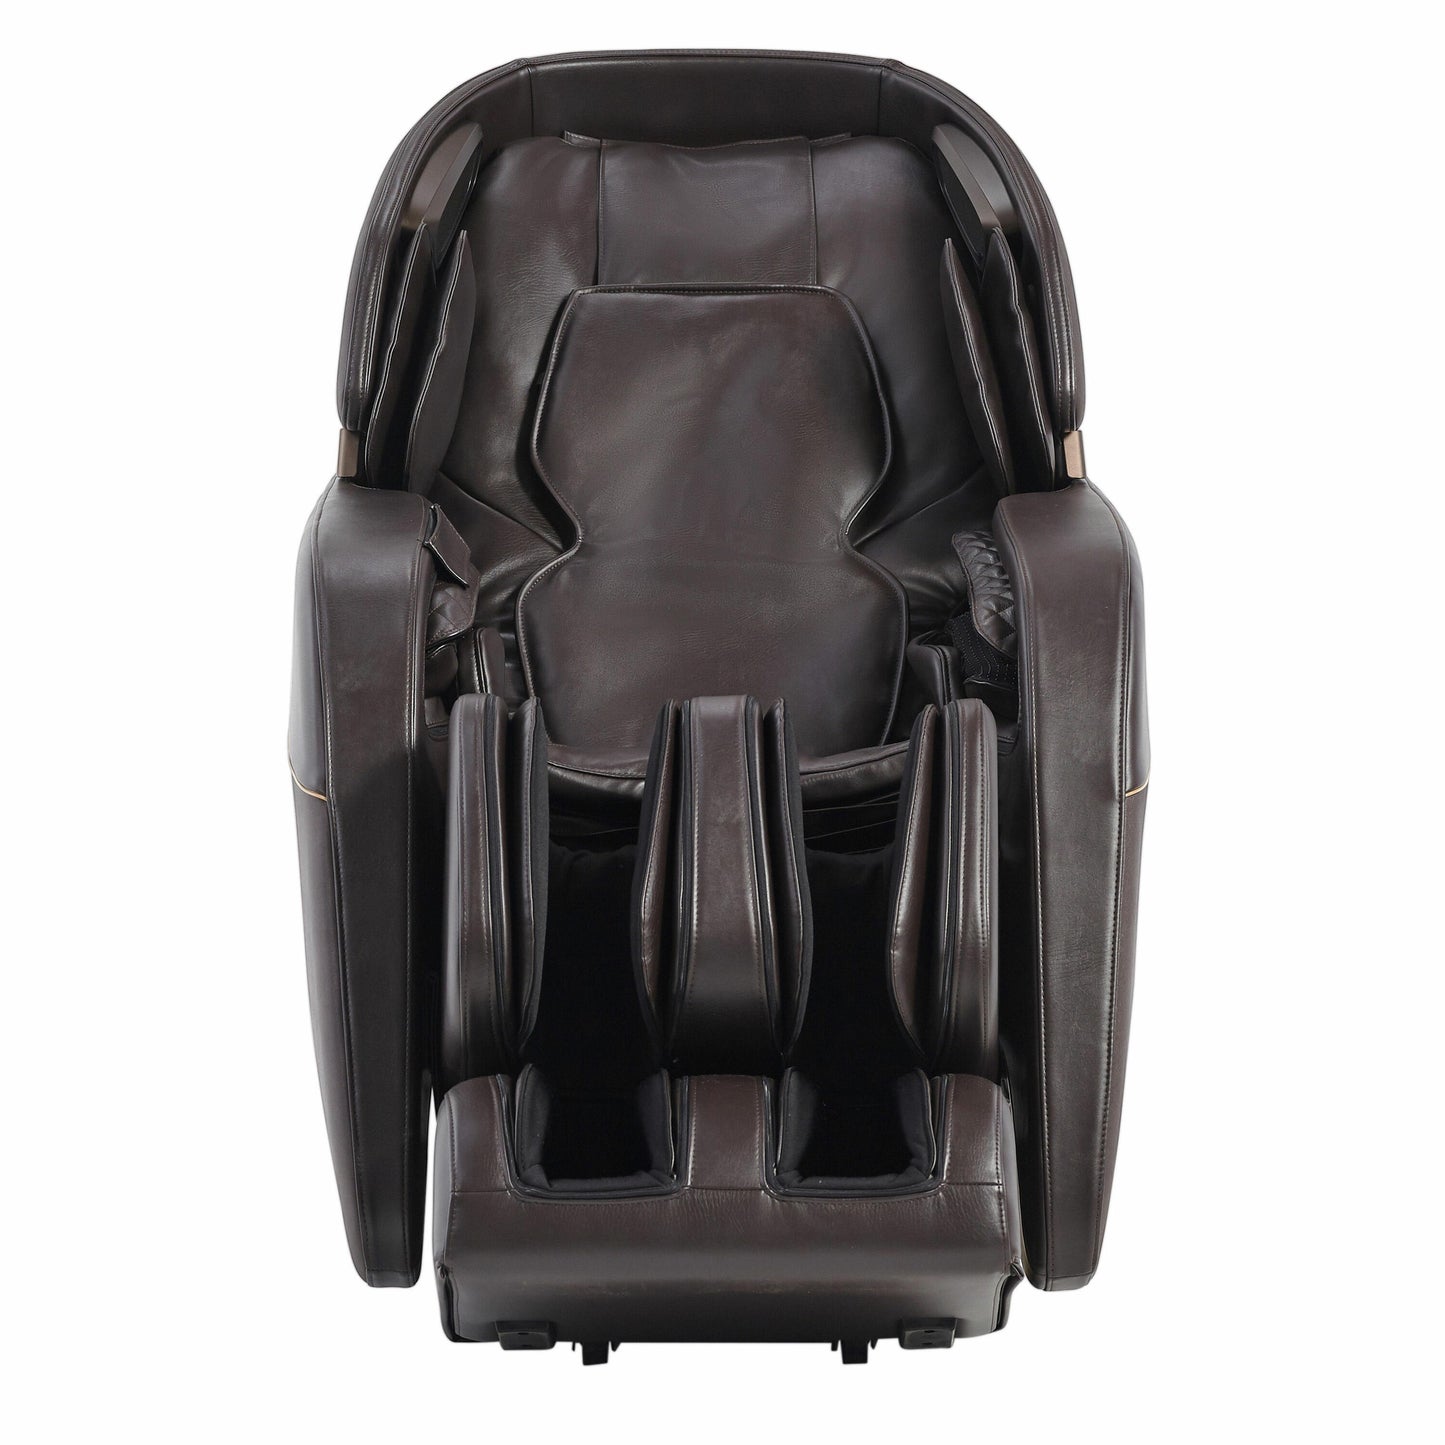 Daiwa Legacy 4 Massage Chair -3D L-Track -Space Saver